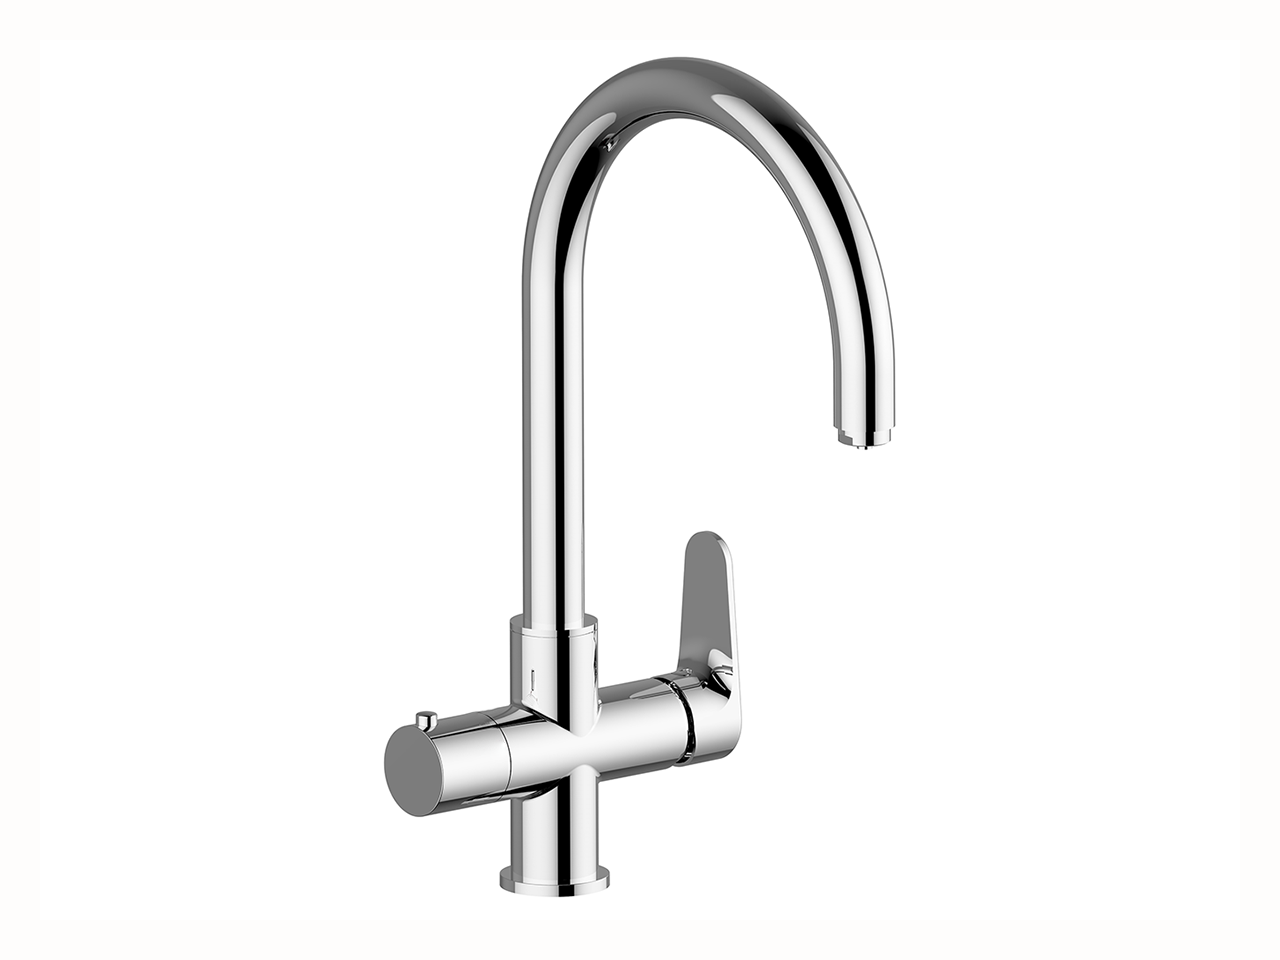 CisalSingle handle Kitchen AquaPura KITCHEN_A3000985